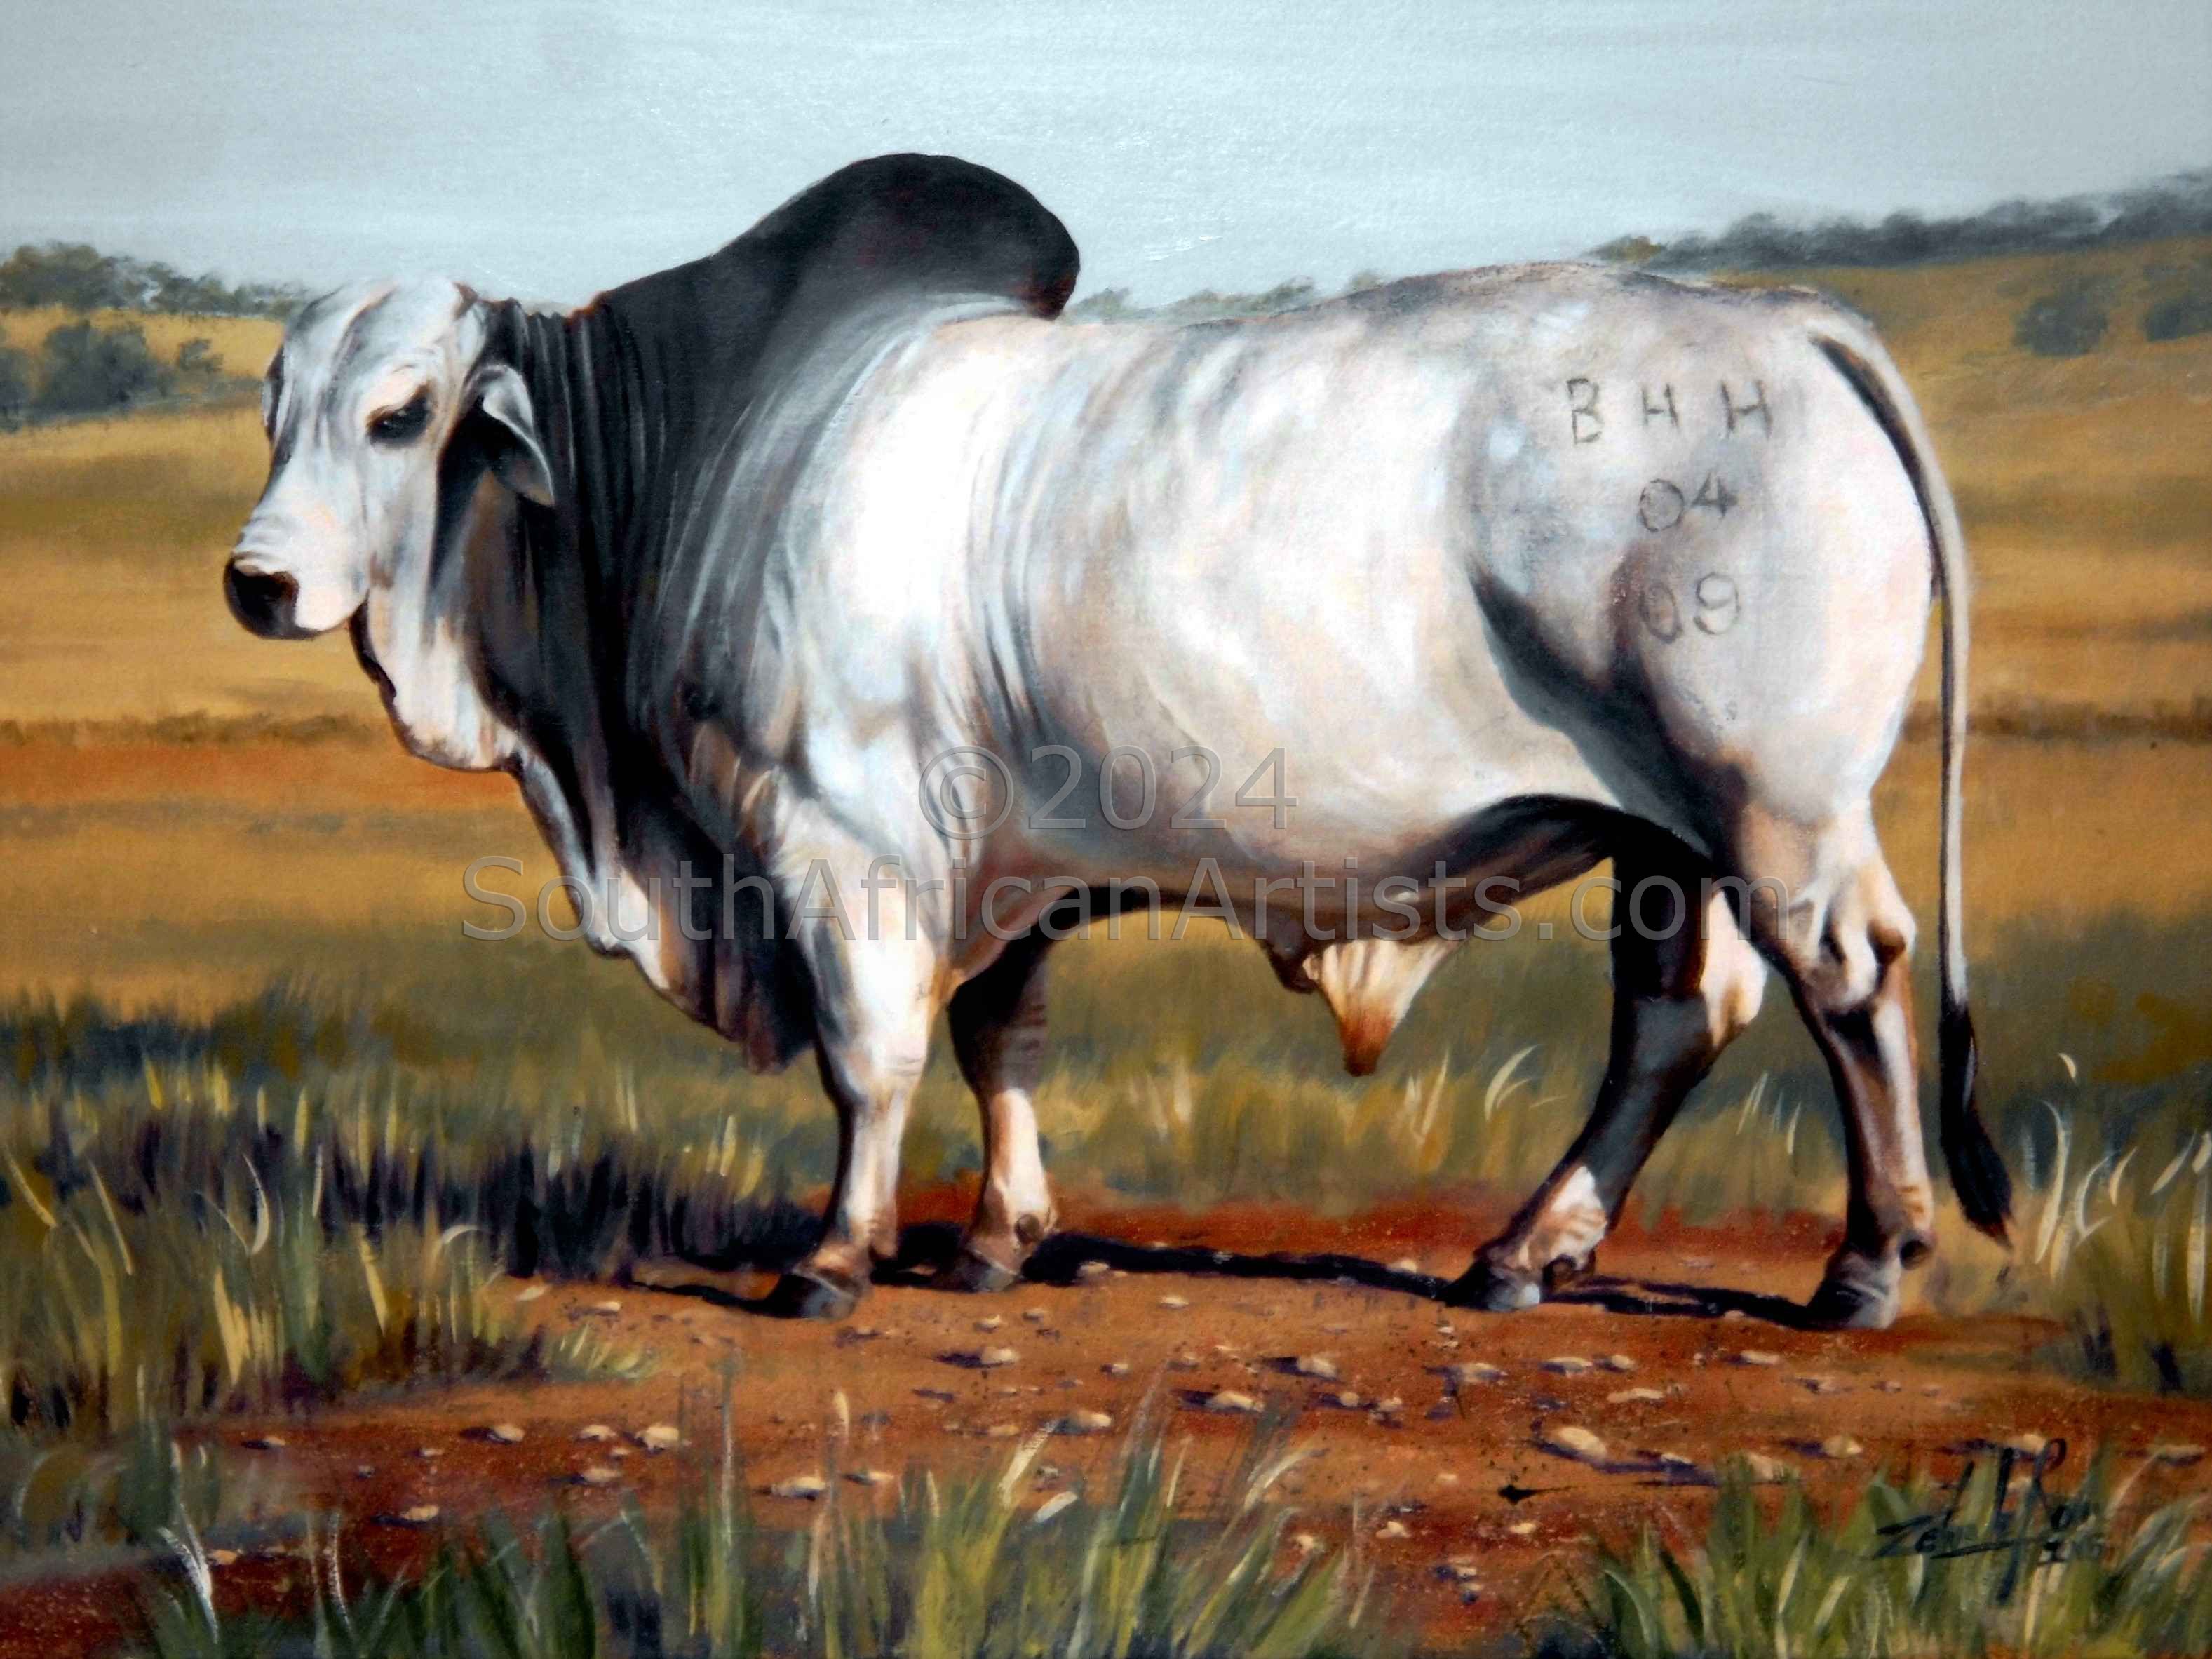 Brahman Bull BHH 0409